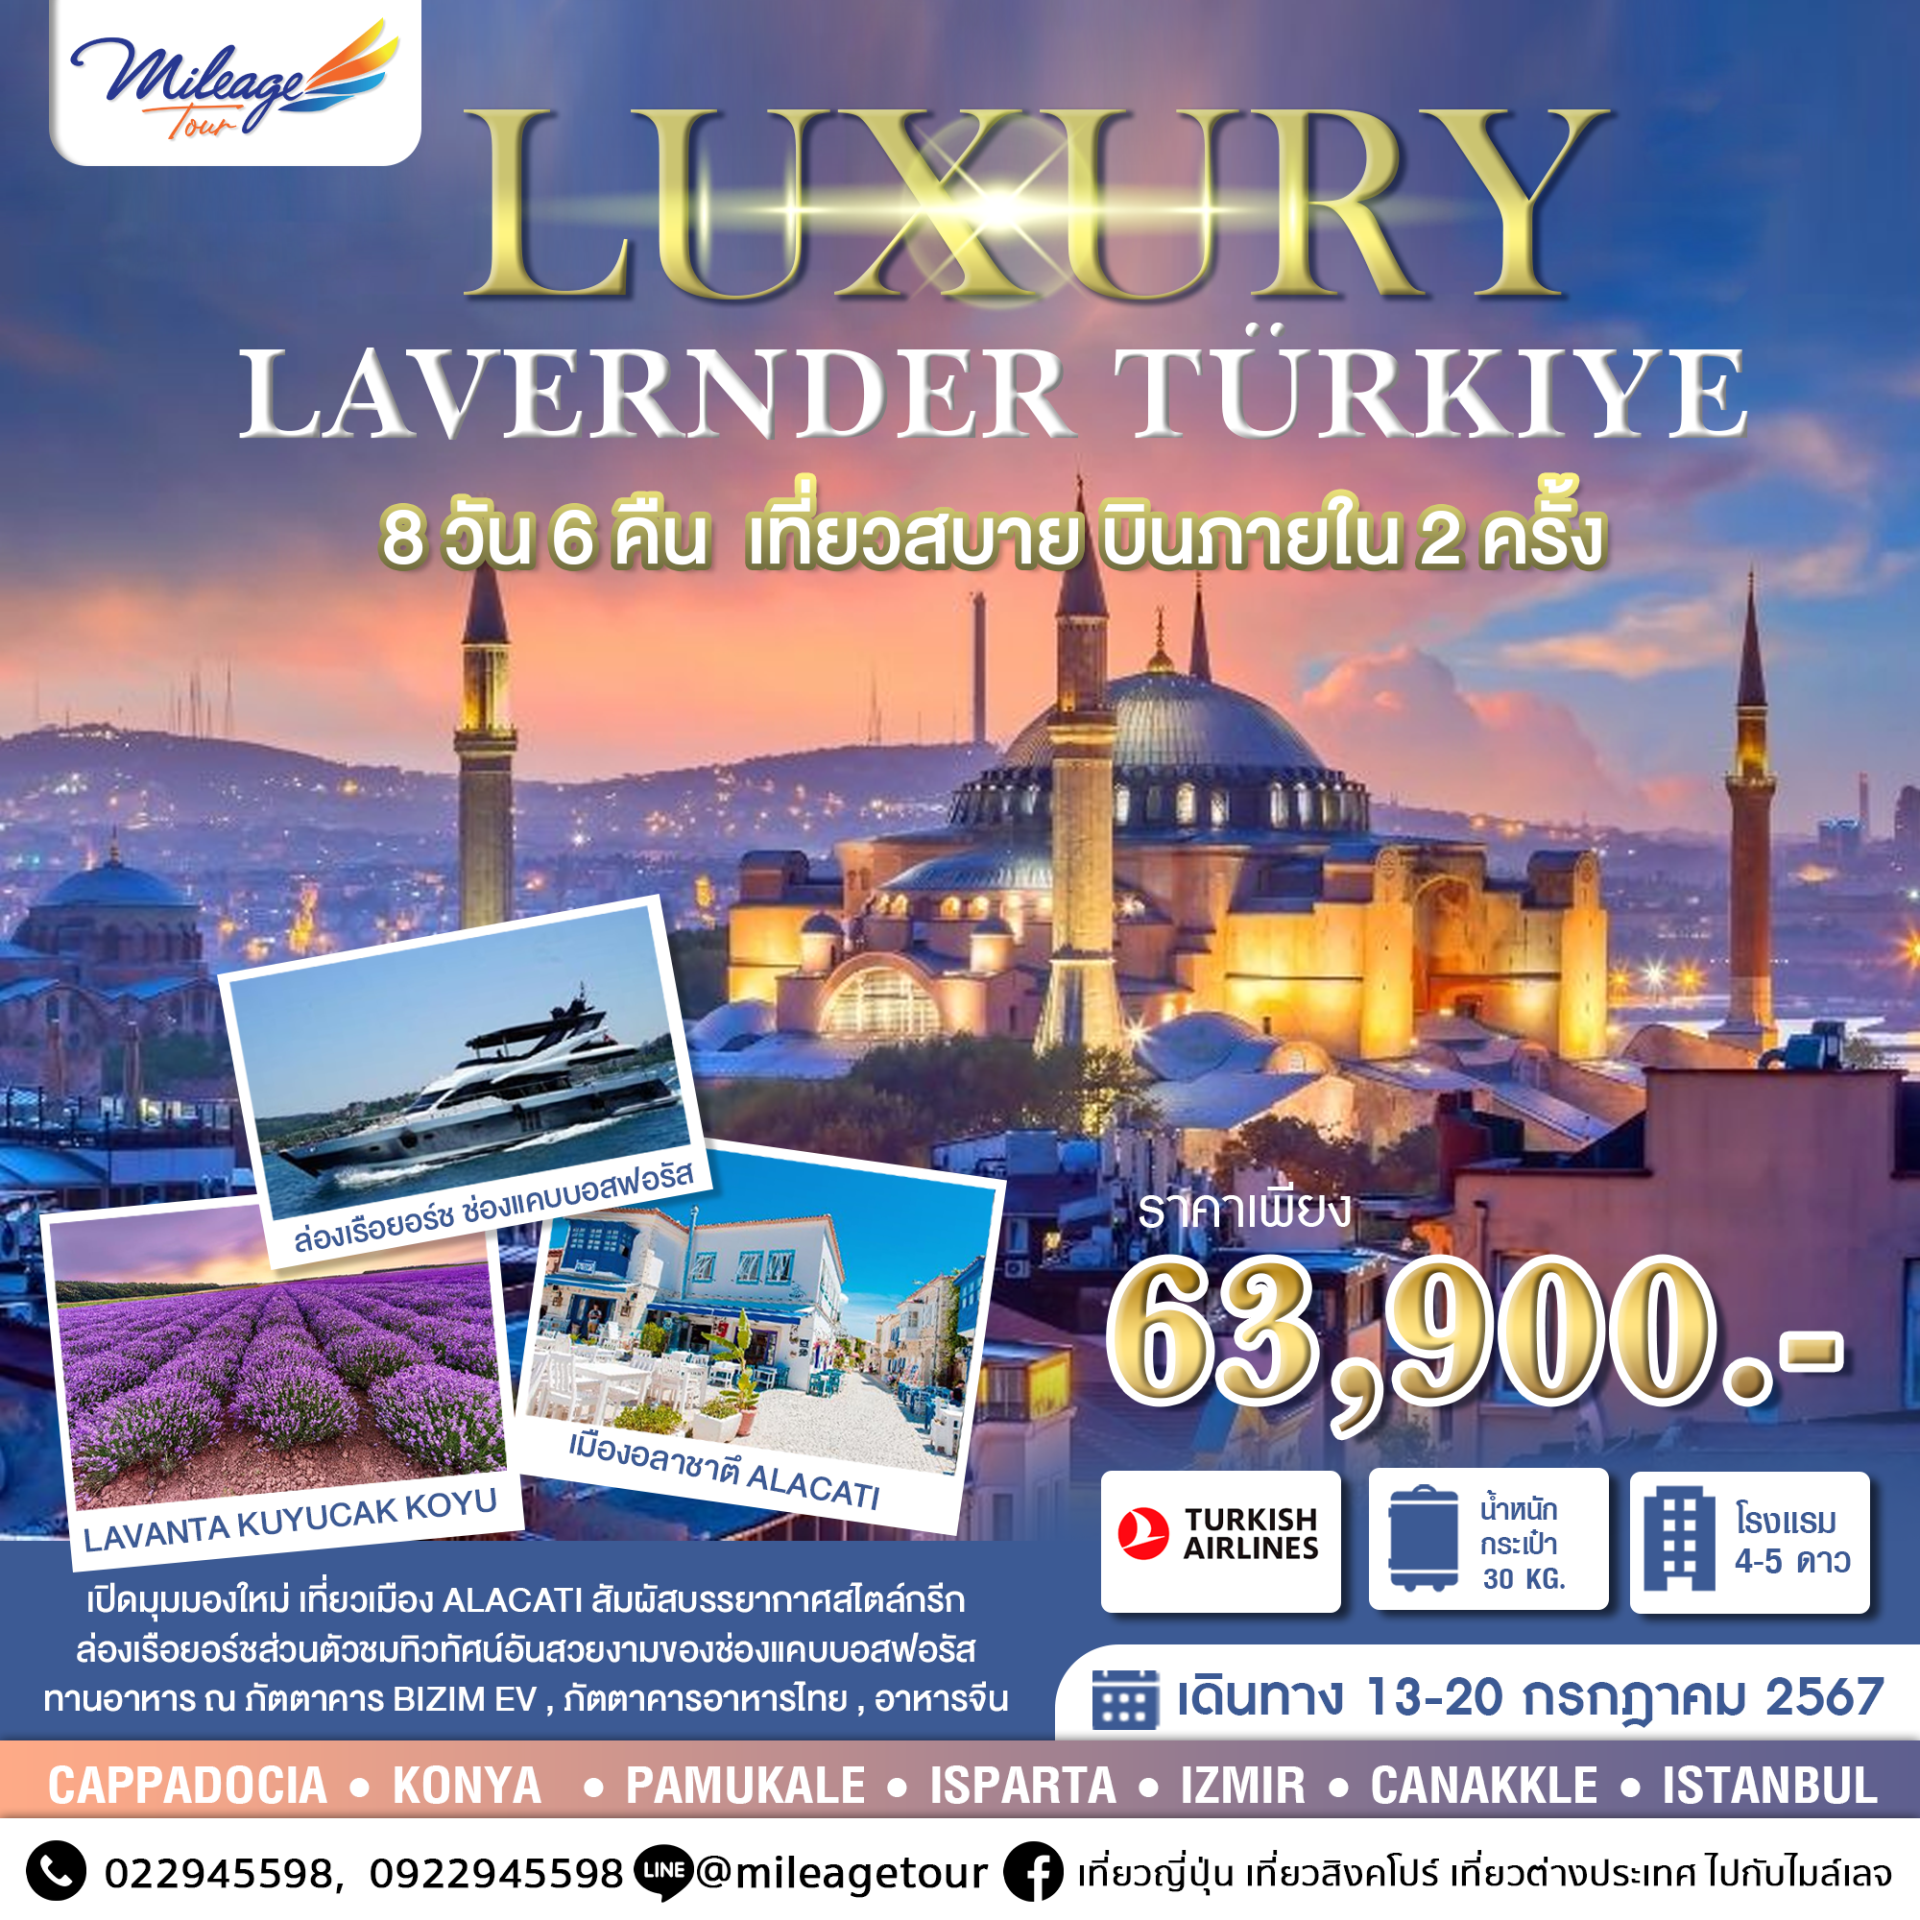 LUXURY LAVENDER TURKIYE 8 วัน 6 คืน บินสายการบิน TURKISH AIRLINES เดินทาง 13-20 กรกฎาคม 2567 ราคาเพียง 63900.-